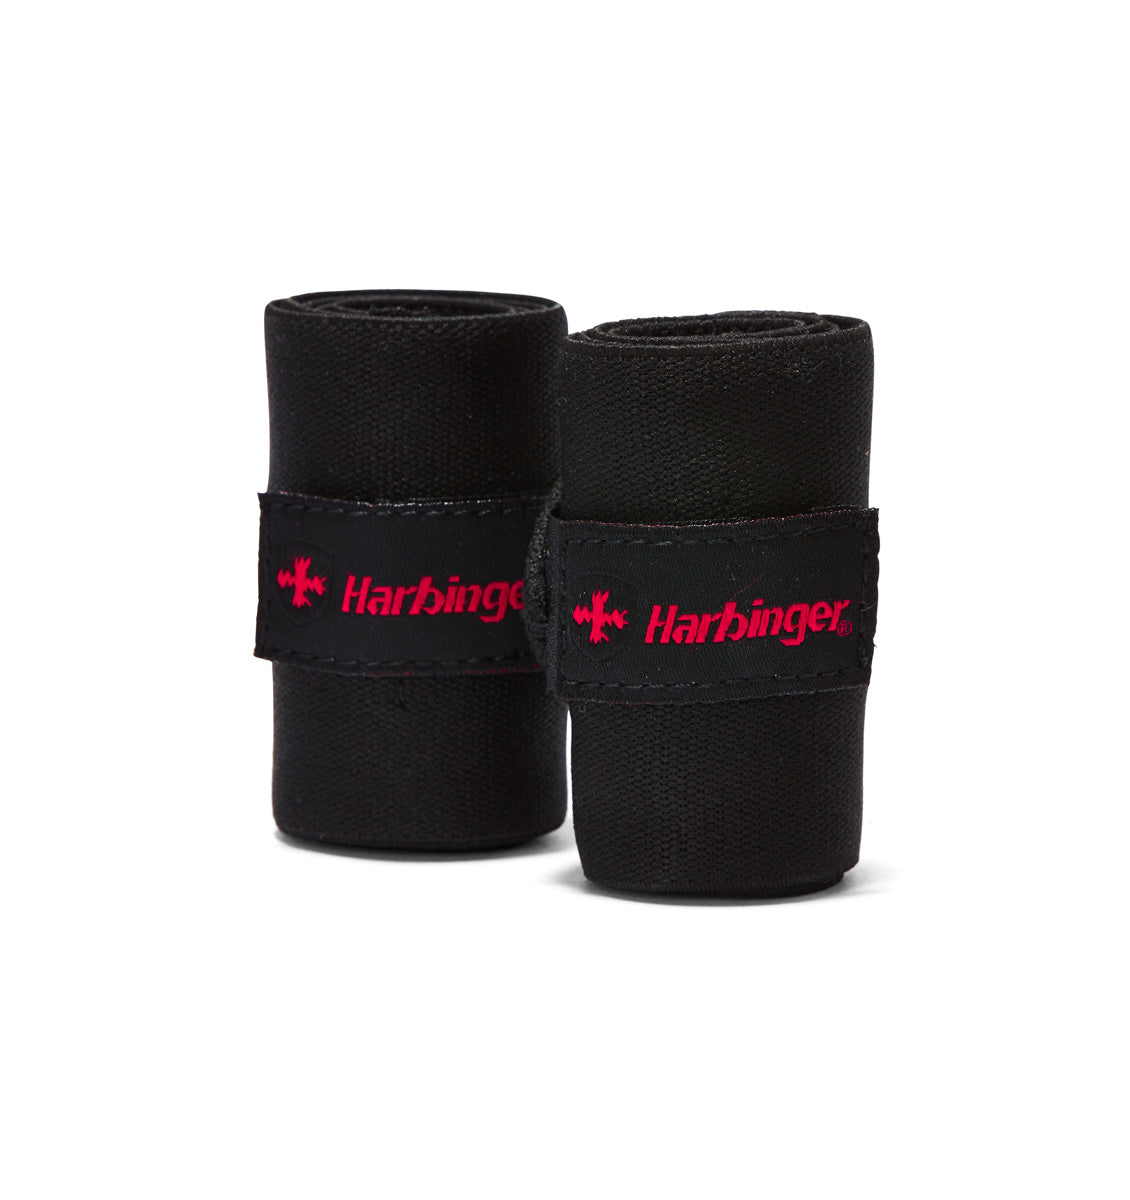 44500 Harbinger Pro Thumb Loop Wrist Wraps Straps 20 inch Pair